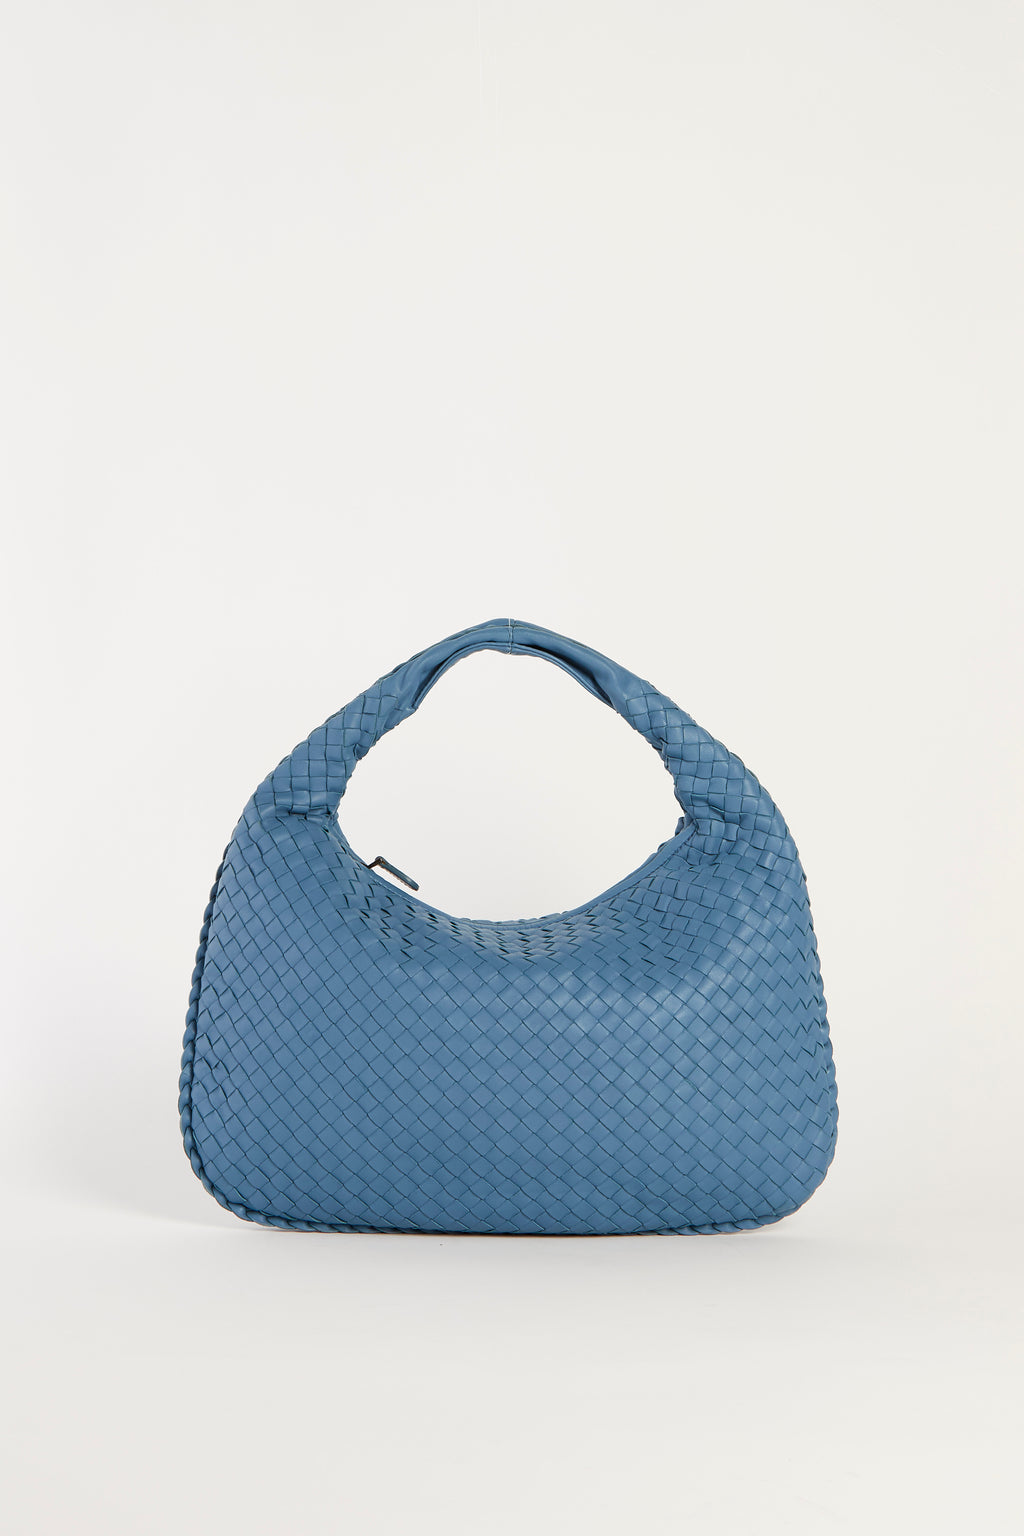 Vintage Bottega Veneta Baby Blue Intrecciato Shoulder Bag